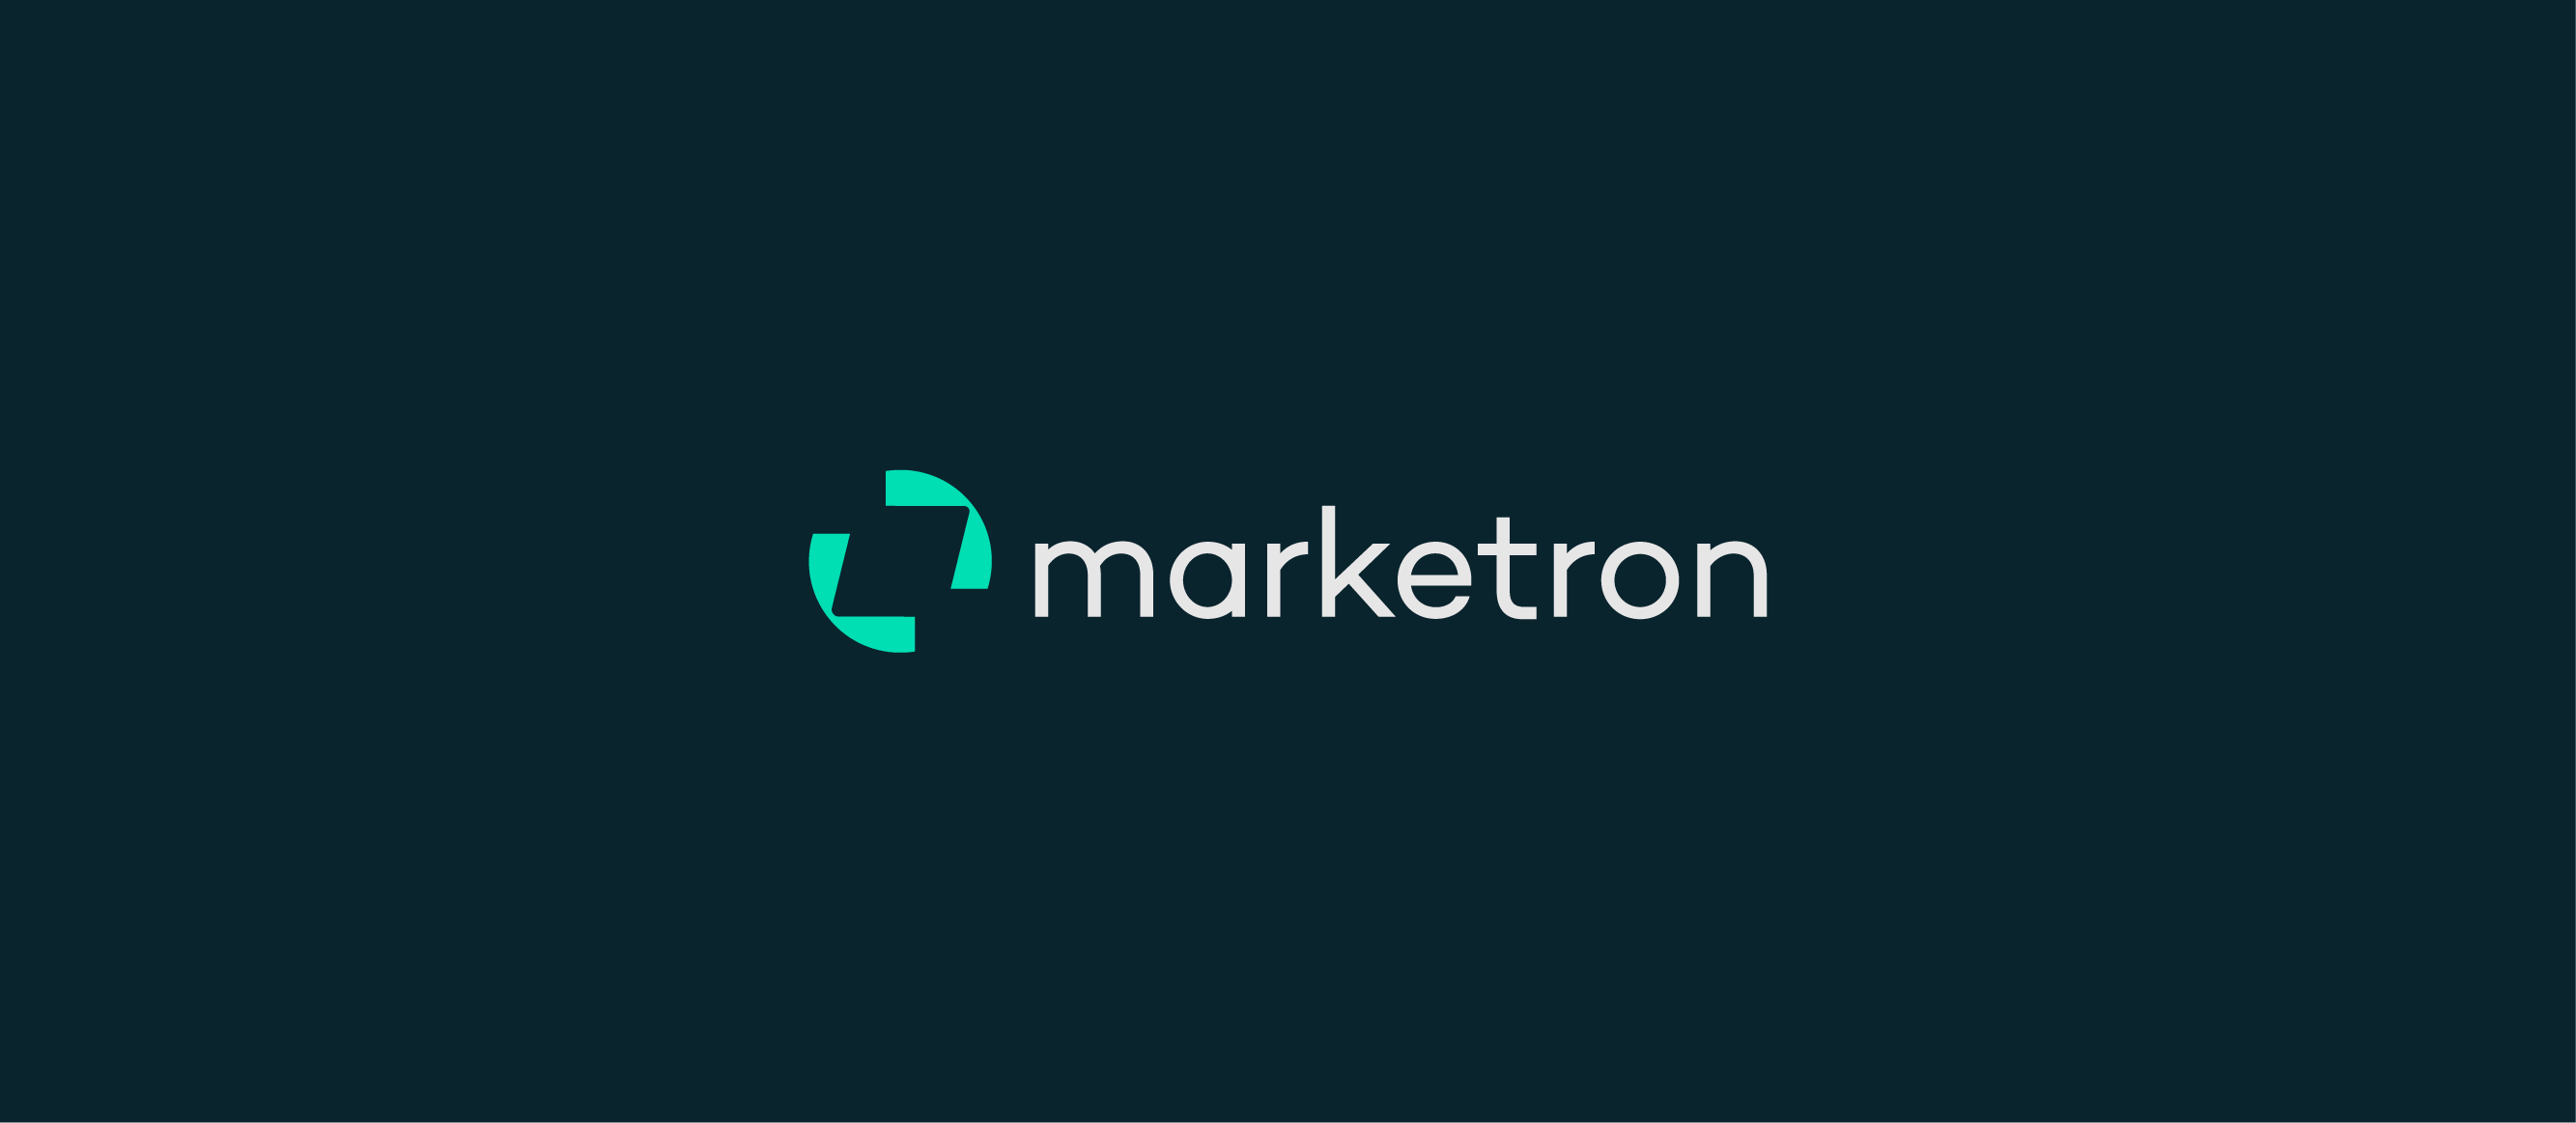 marketron-logo-design-identity-02